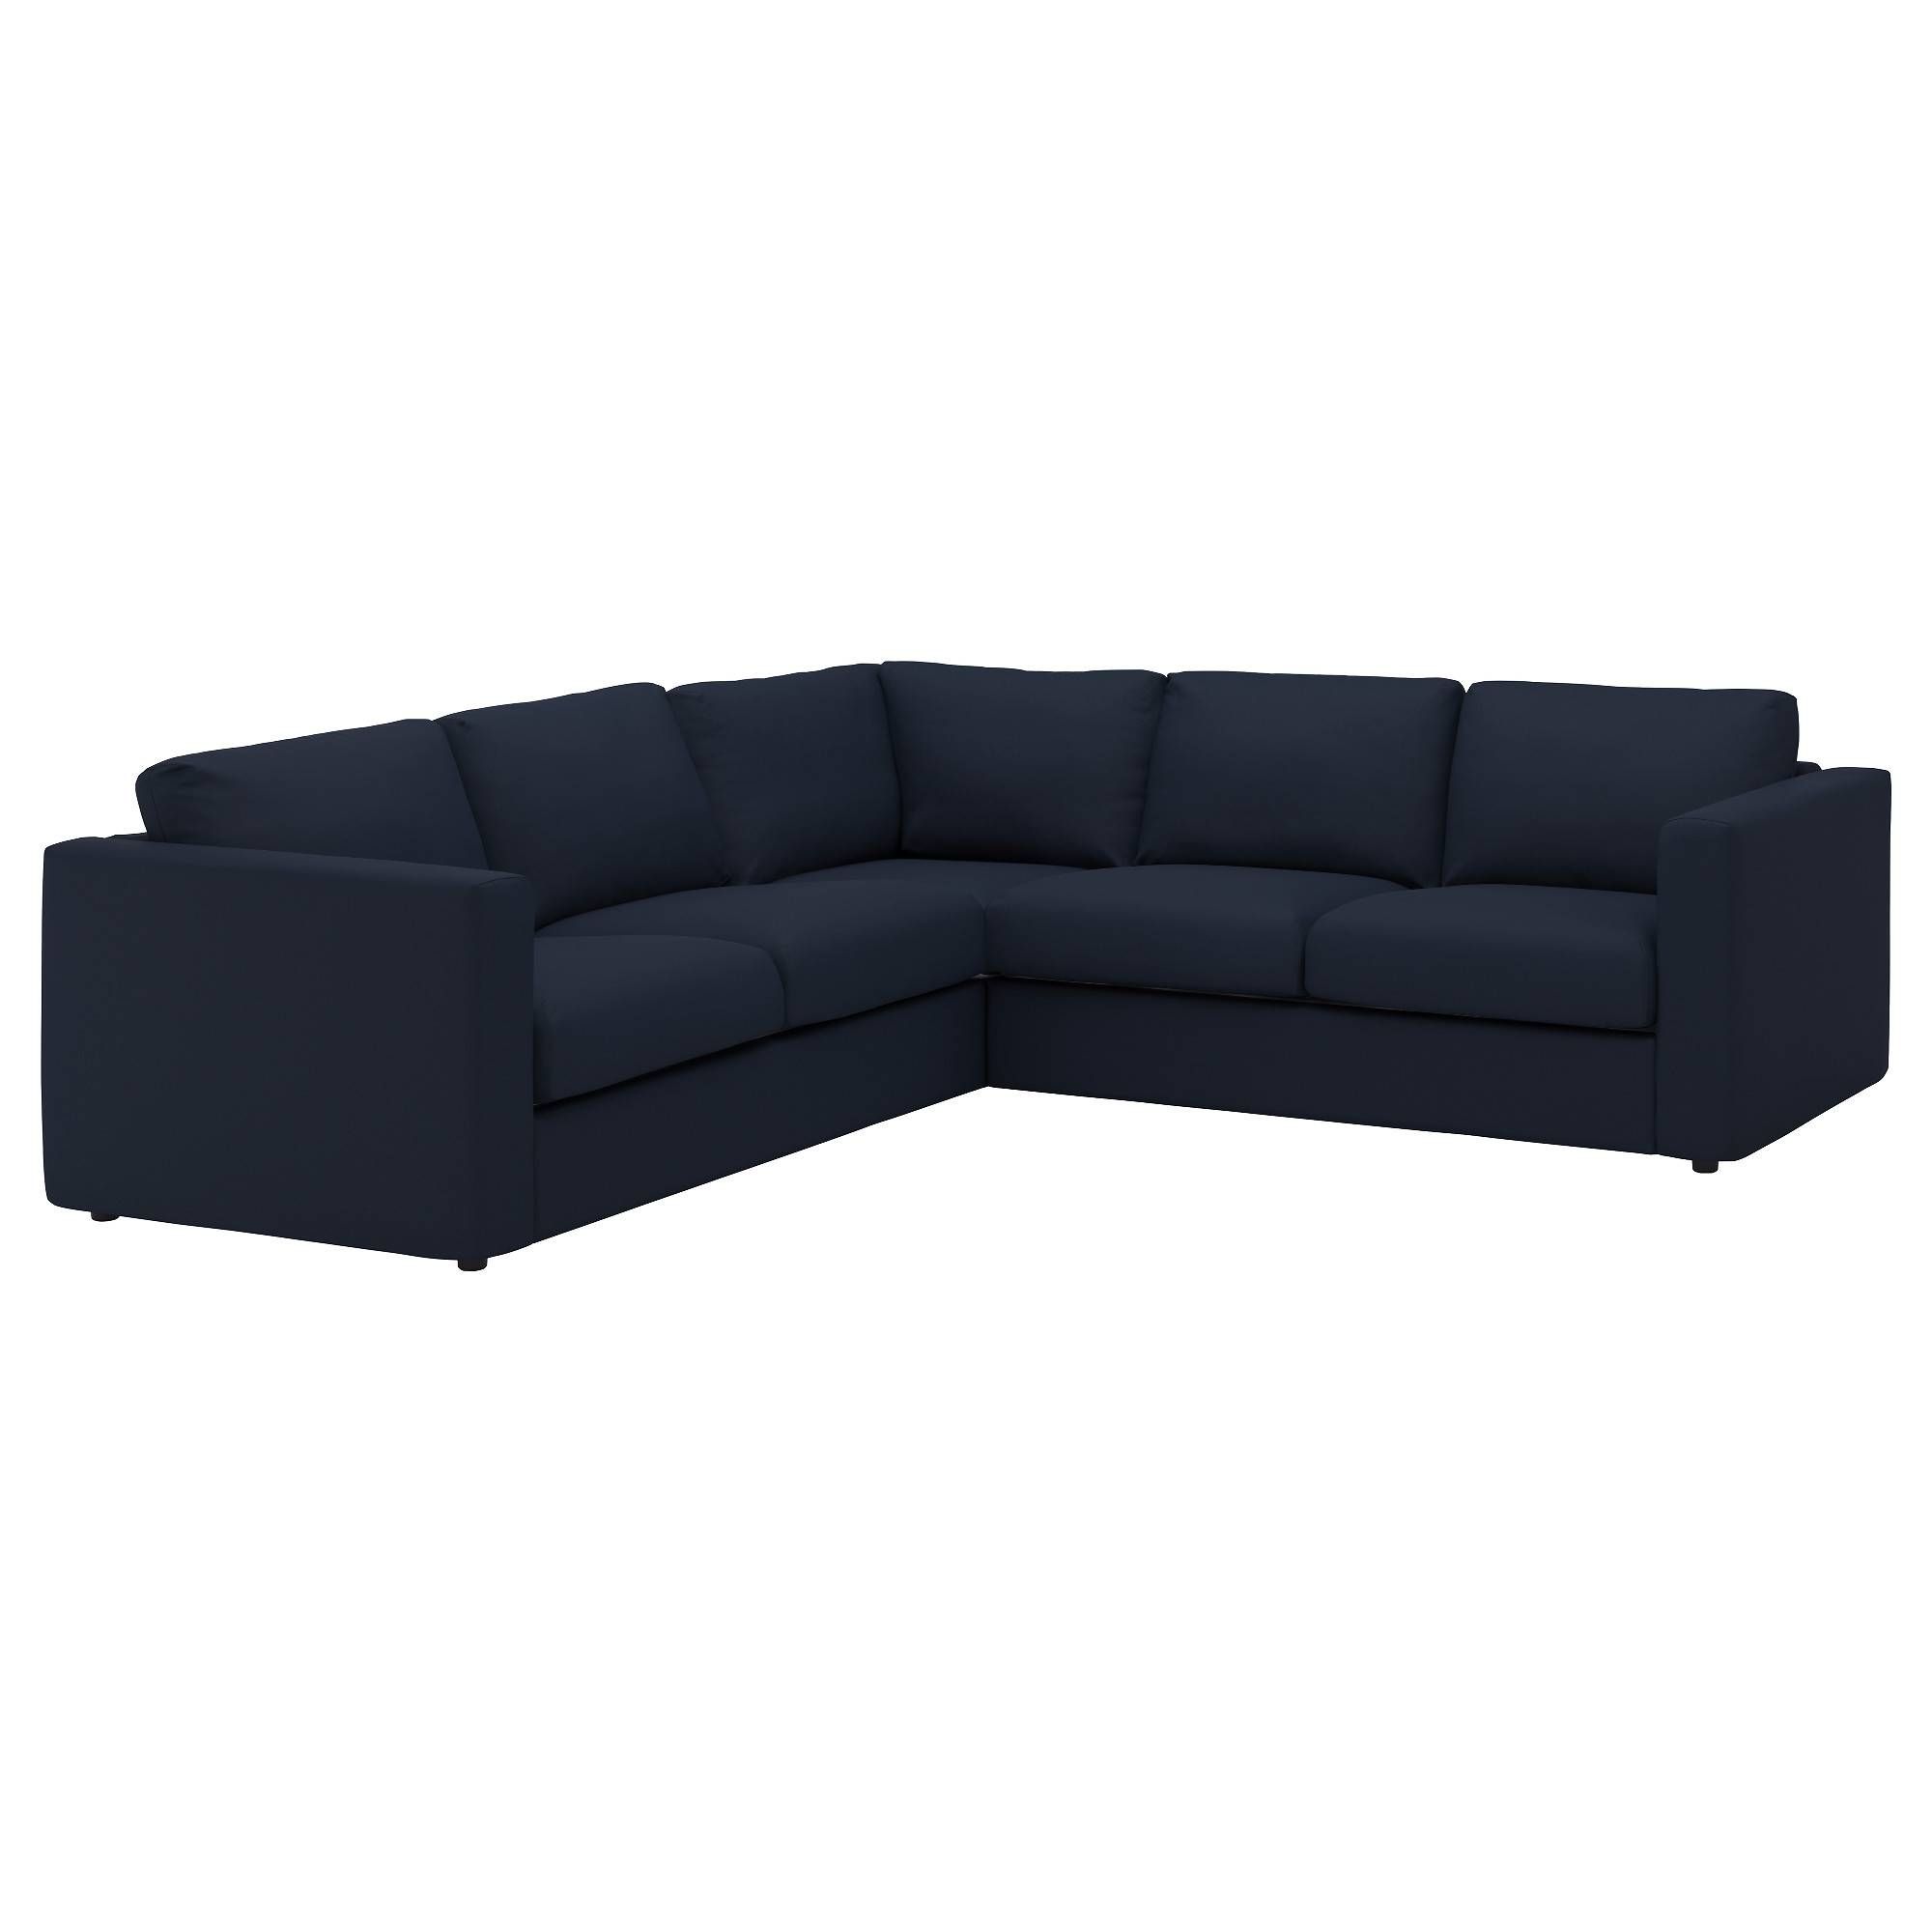 Vimle Corner Sofa, 4 Seat Gräsbo Black Blue – Ikea Pertaining To Black Corner Sofas (View 8 of 15)